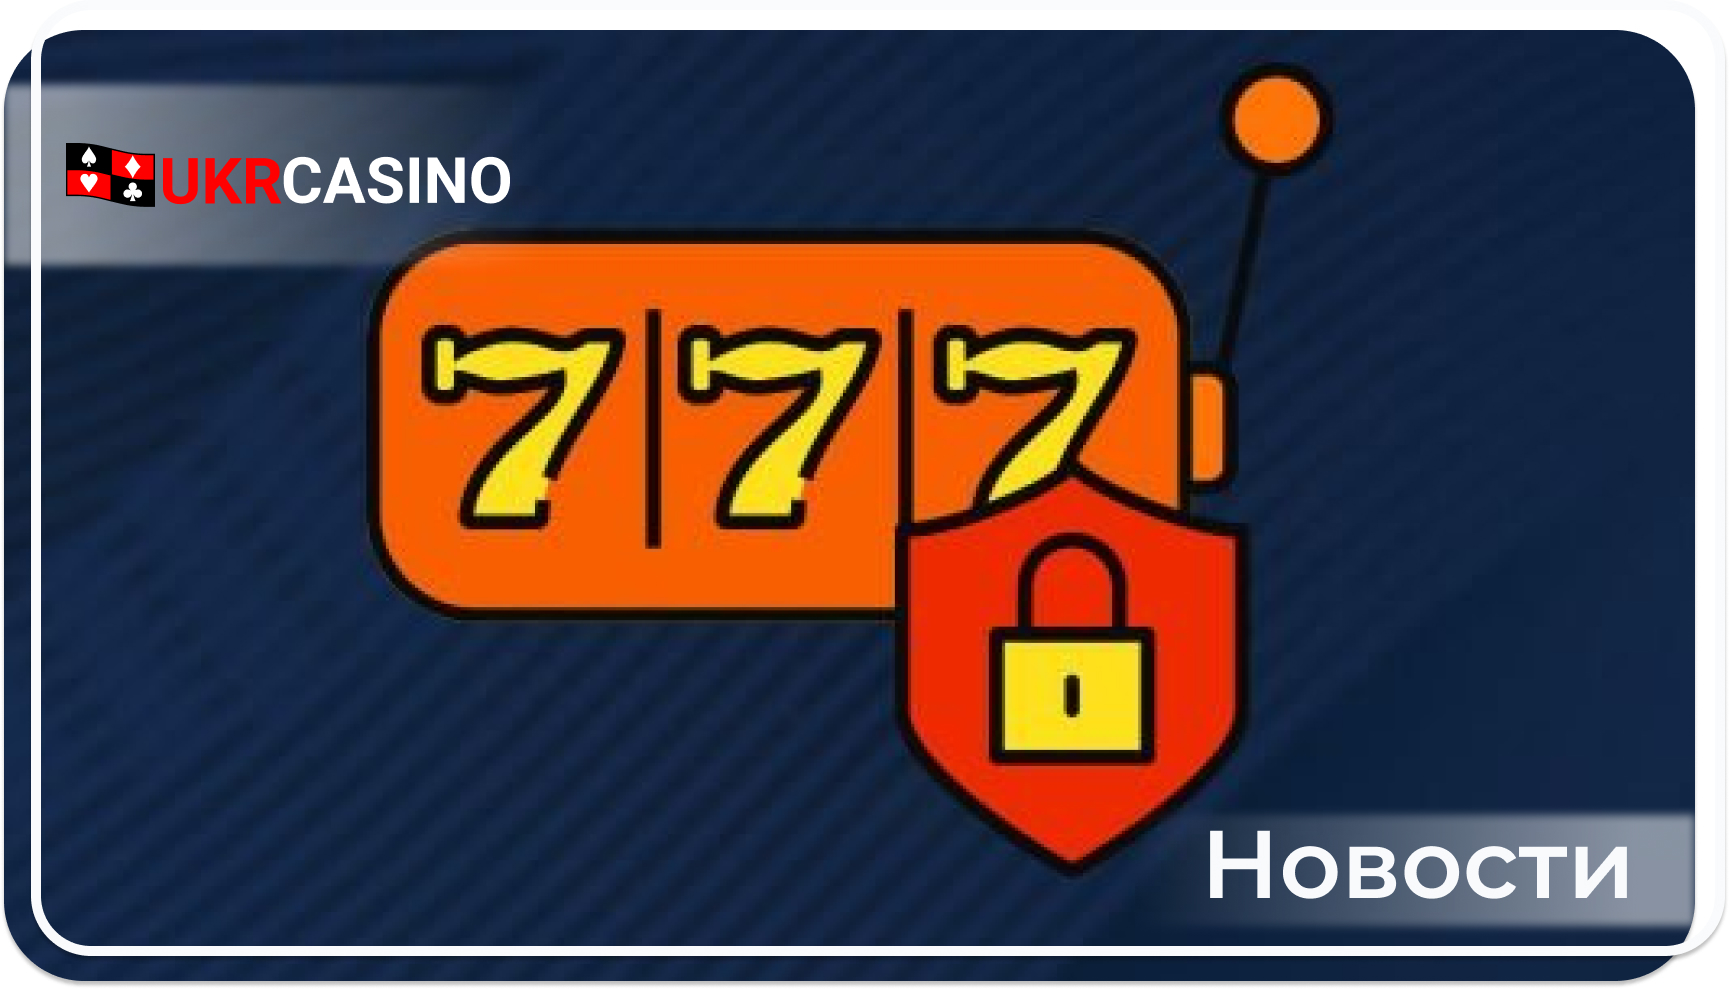 Руководство по безопасности онлайн-казино